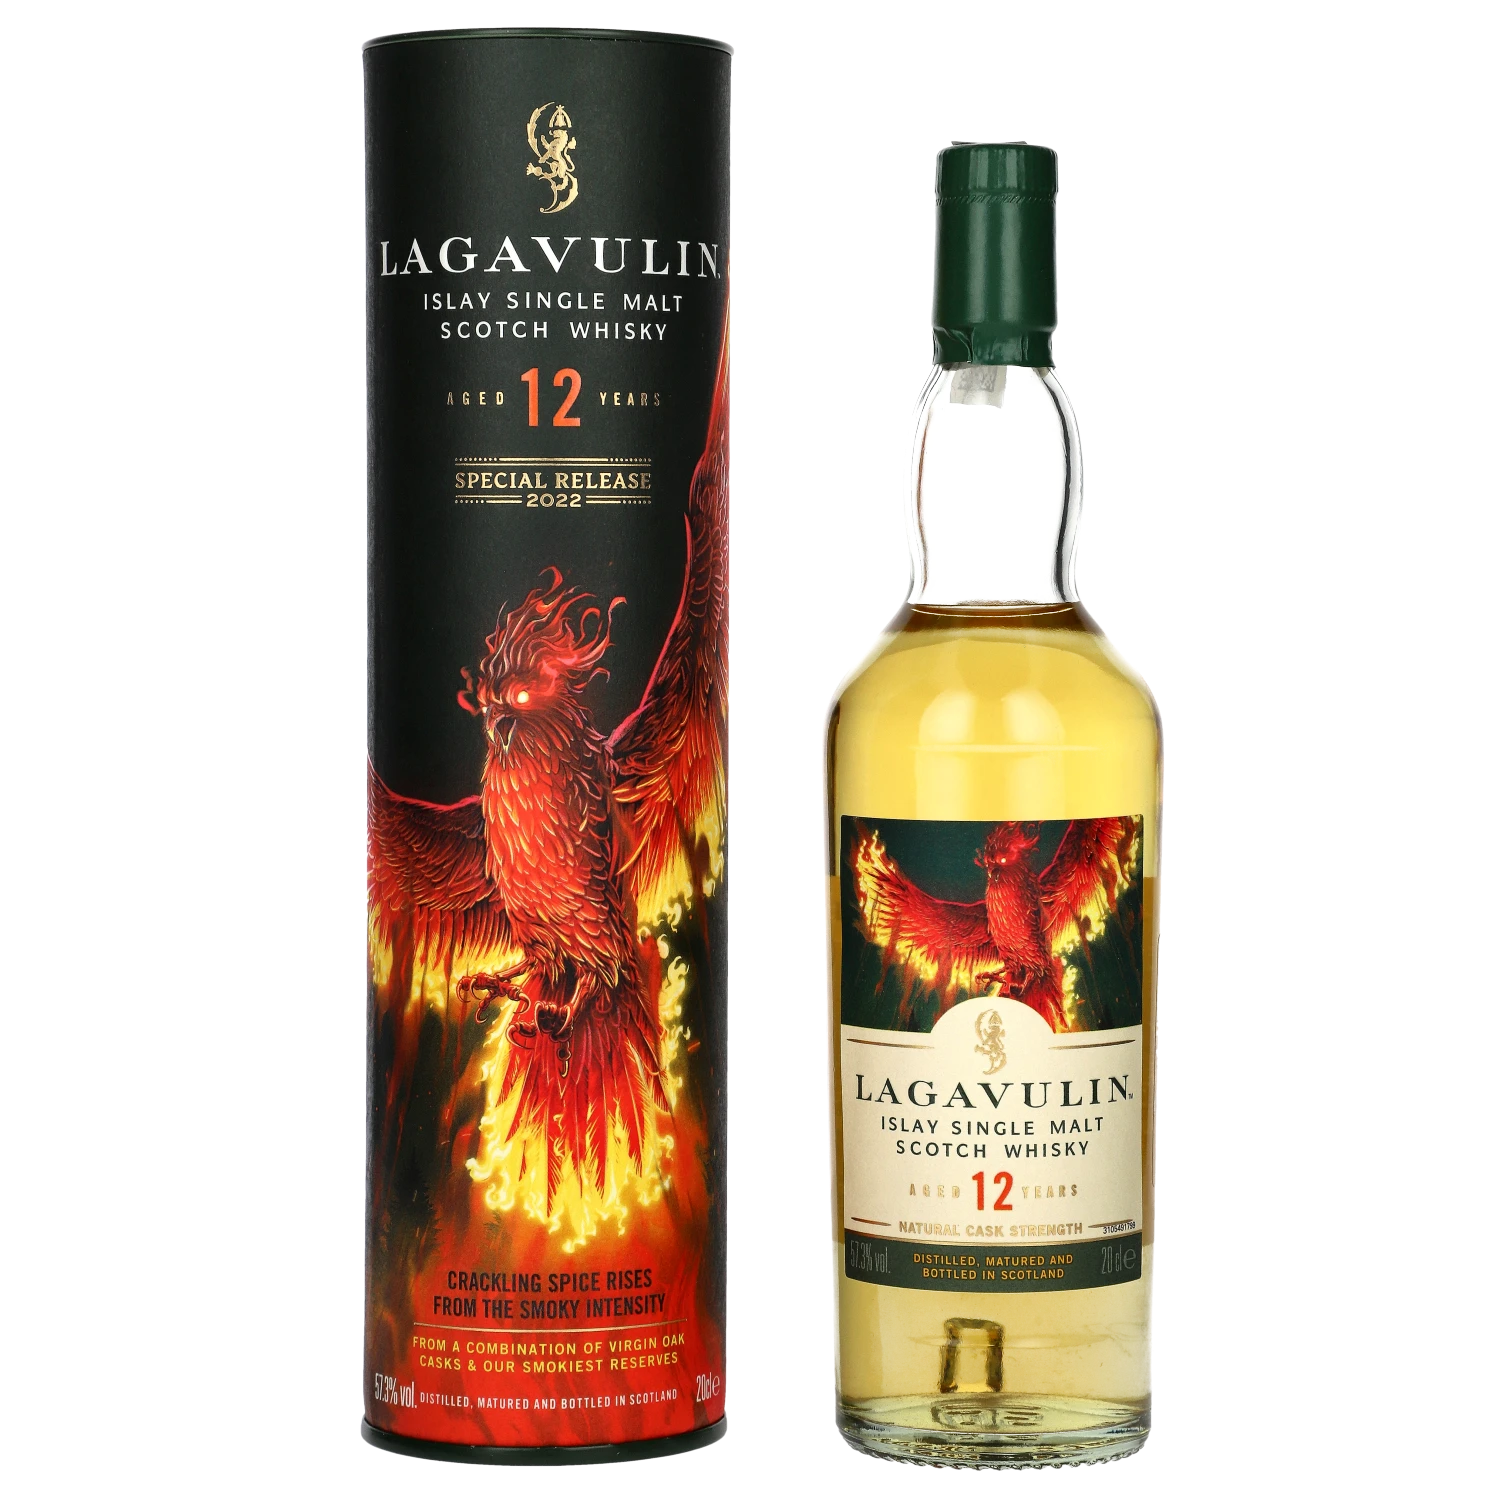 Lagavulin 8 Years Scotch Malt Whisky 0.7L (48% Vol.) - Lagavulin - Whisky